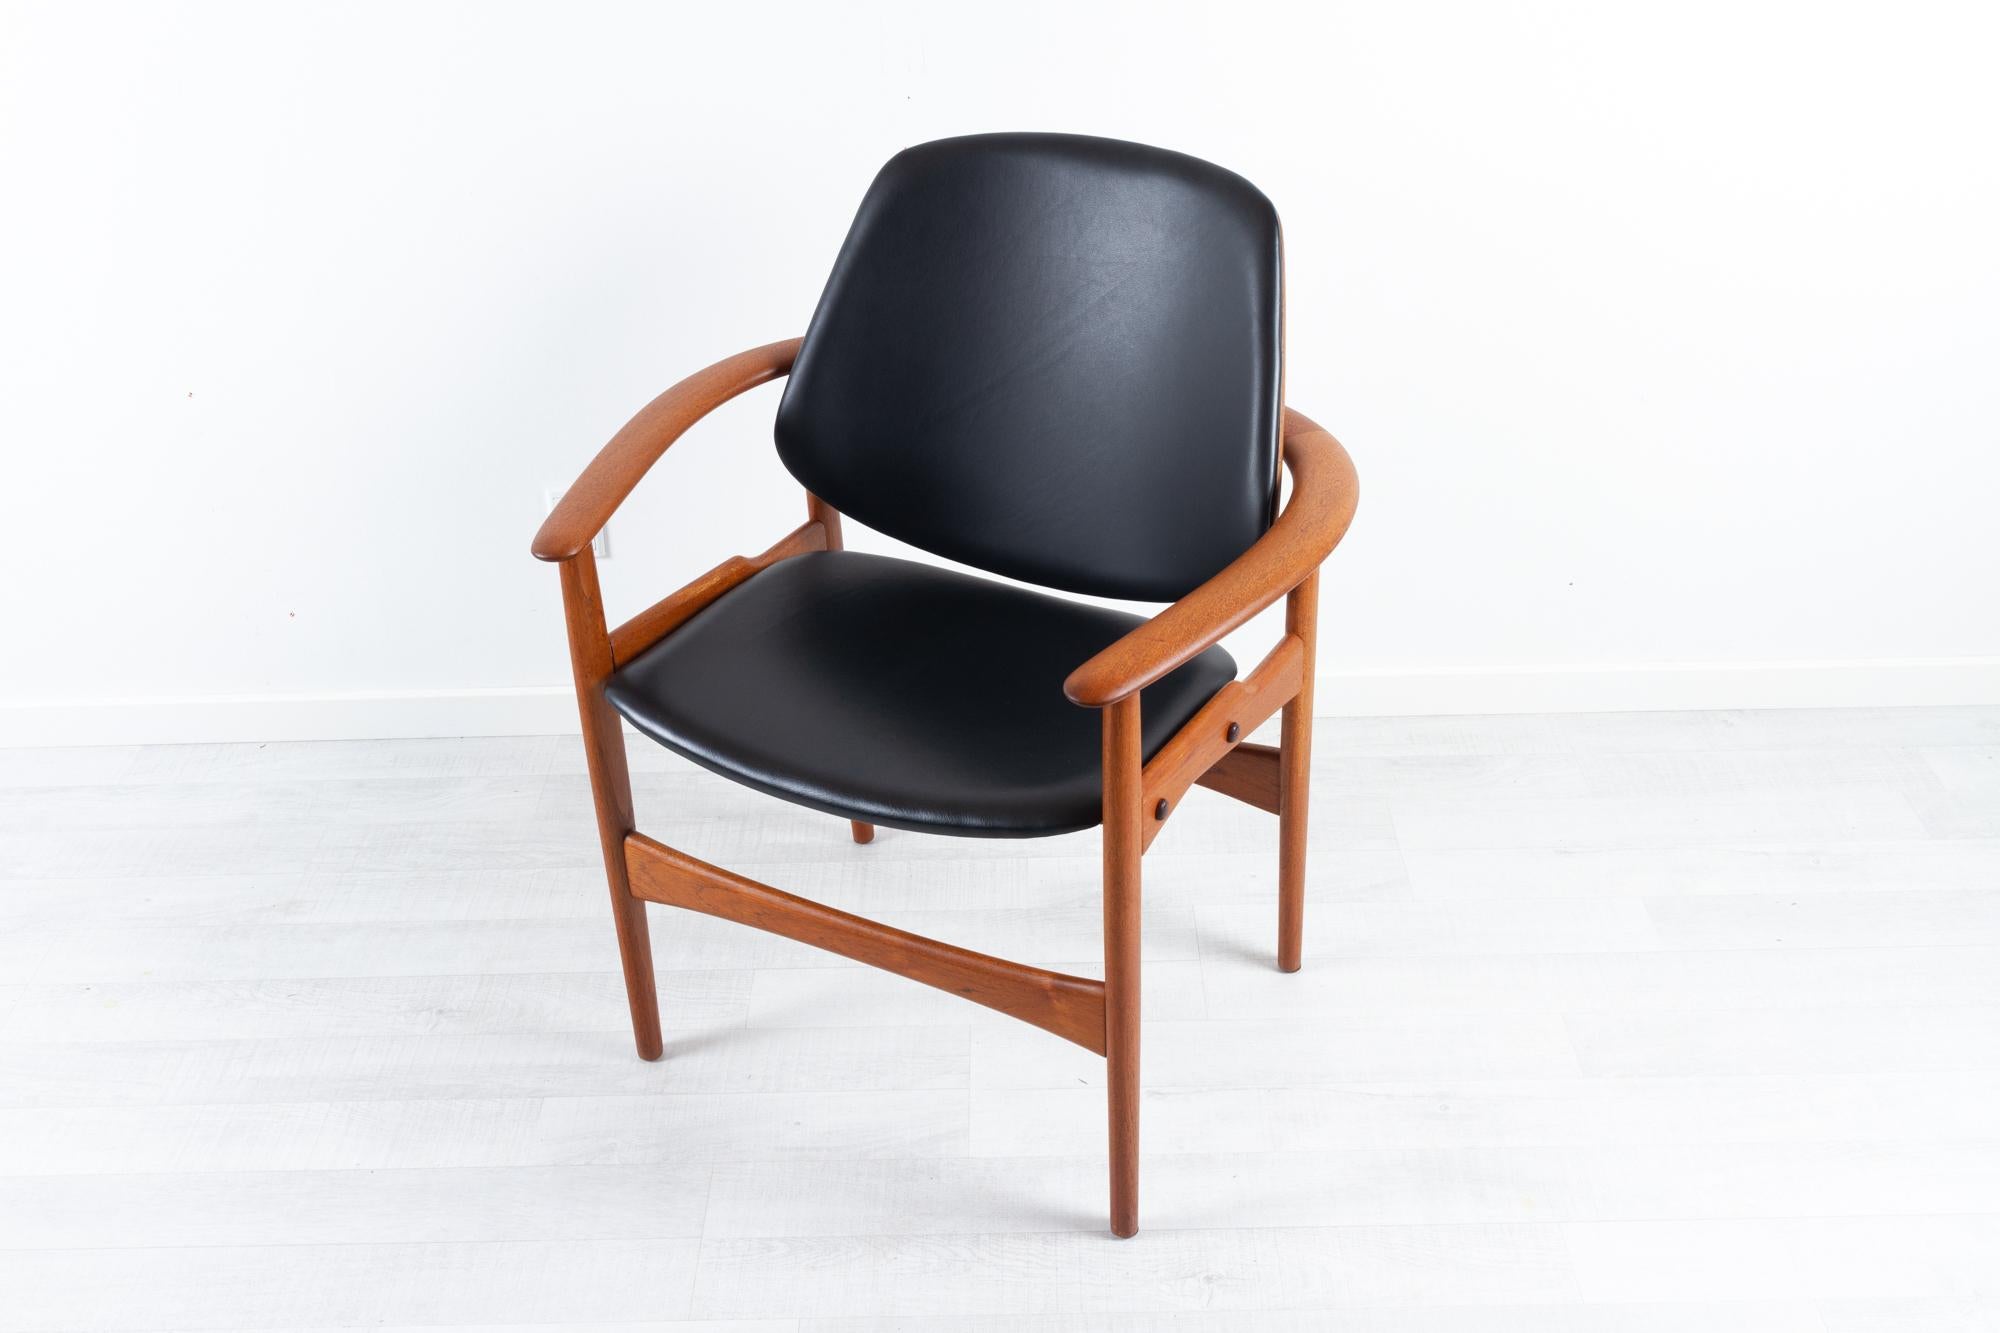 Vintage Danish teak armchair by Arne Hovmand-Olsen, 1960s
Sculptural Danish Mid-Century Modern chair in solid teak with black leather upholstery. Designed by Danish architect Arne Hovmand Olsen and made by Onsild Møbelfabrik, Denmark for Jutex.